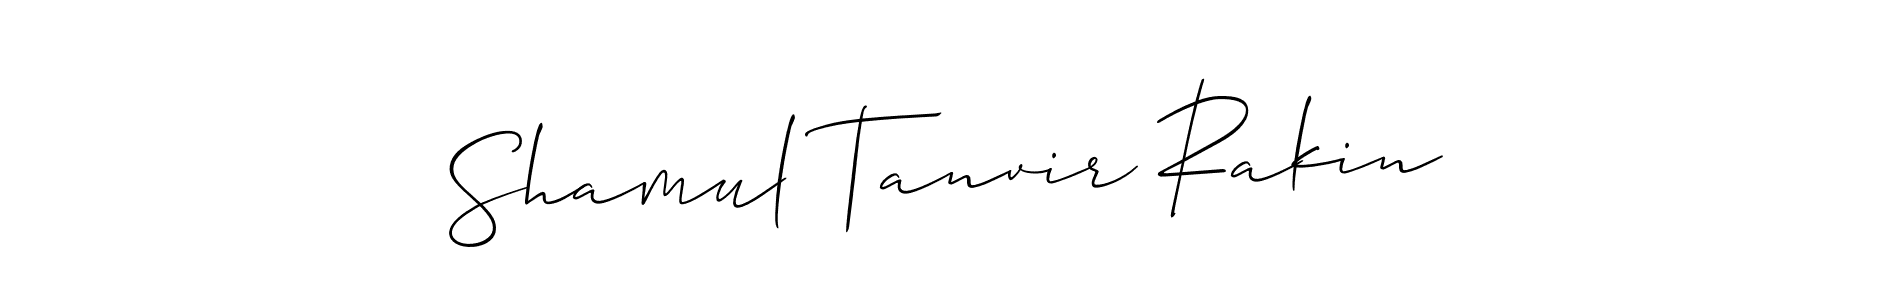 How to Draw Shamul Tanvir Rakin signature style? Allison_Script is a latest design signature styles for name Shamul Tanvir Rakin. Shamul Tanvir Rakin signature style 2 images and pictures png